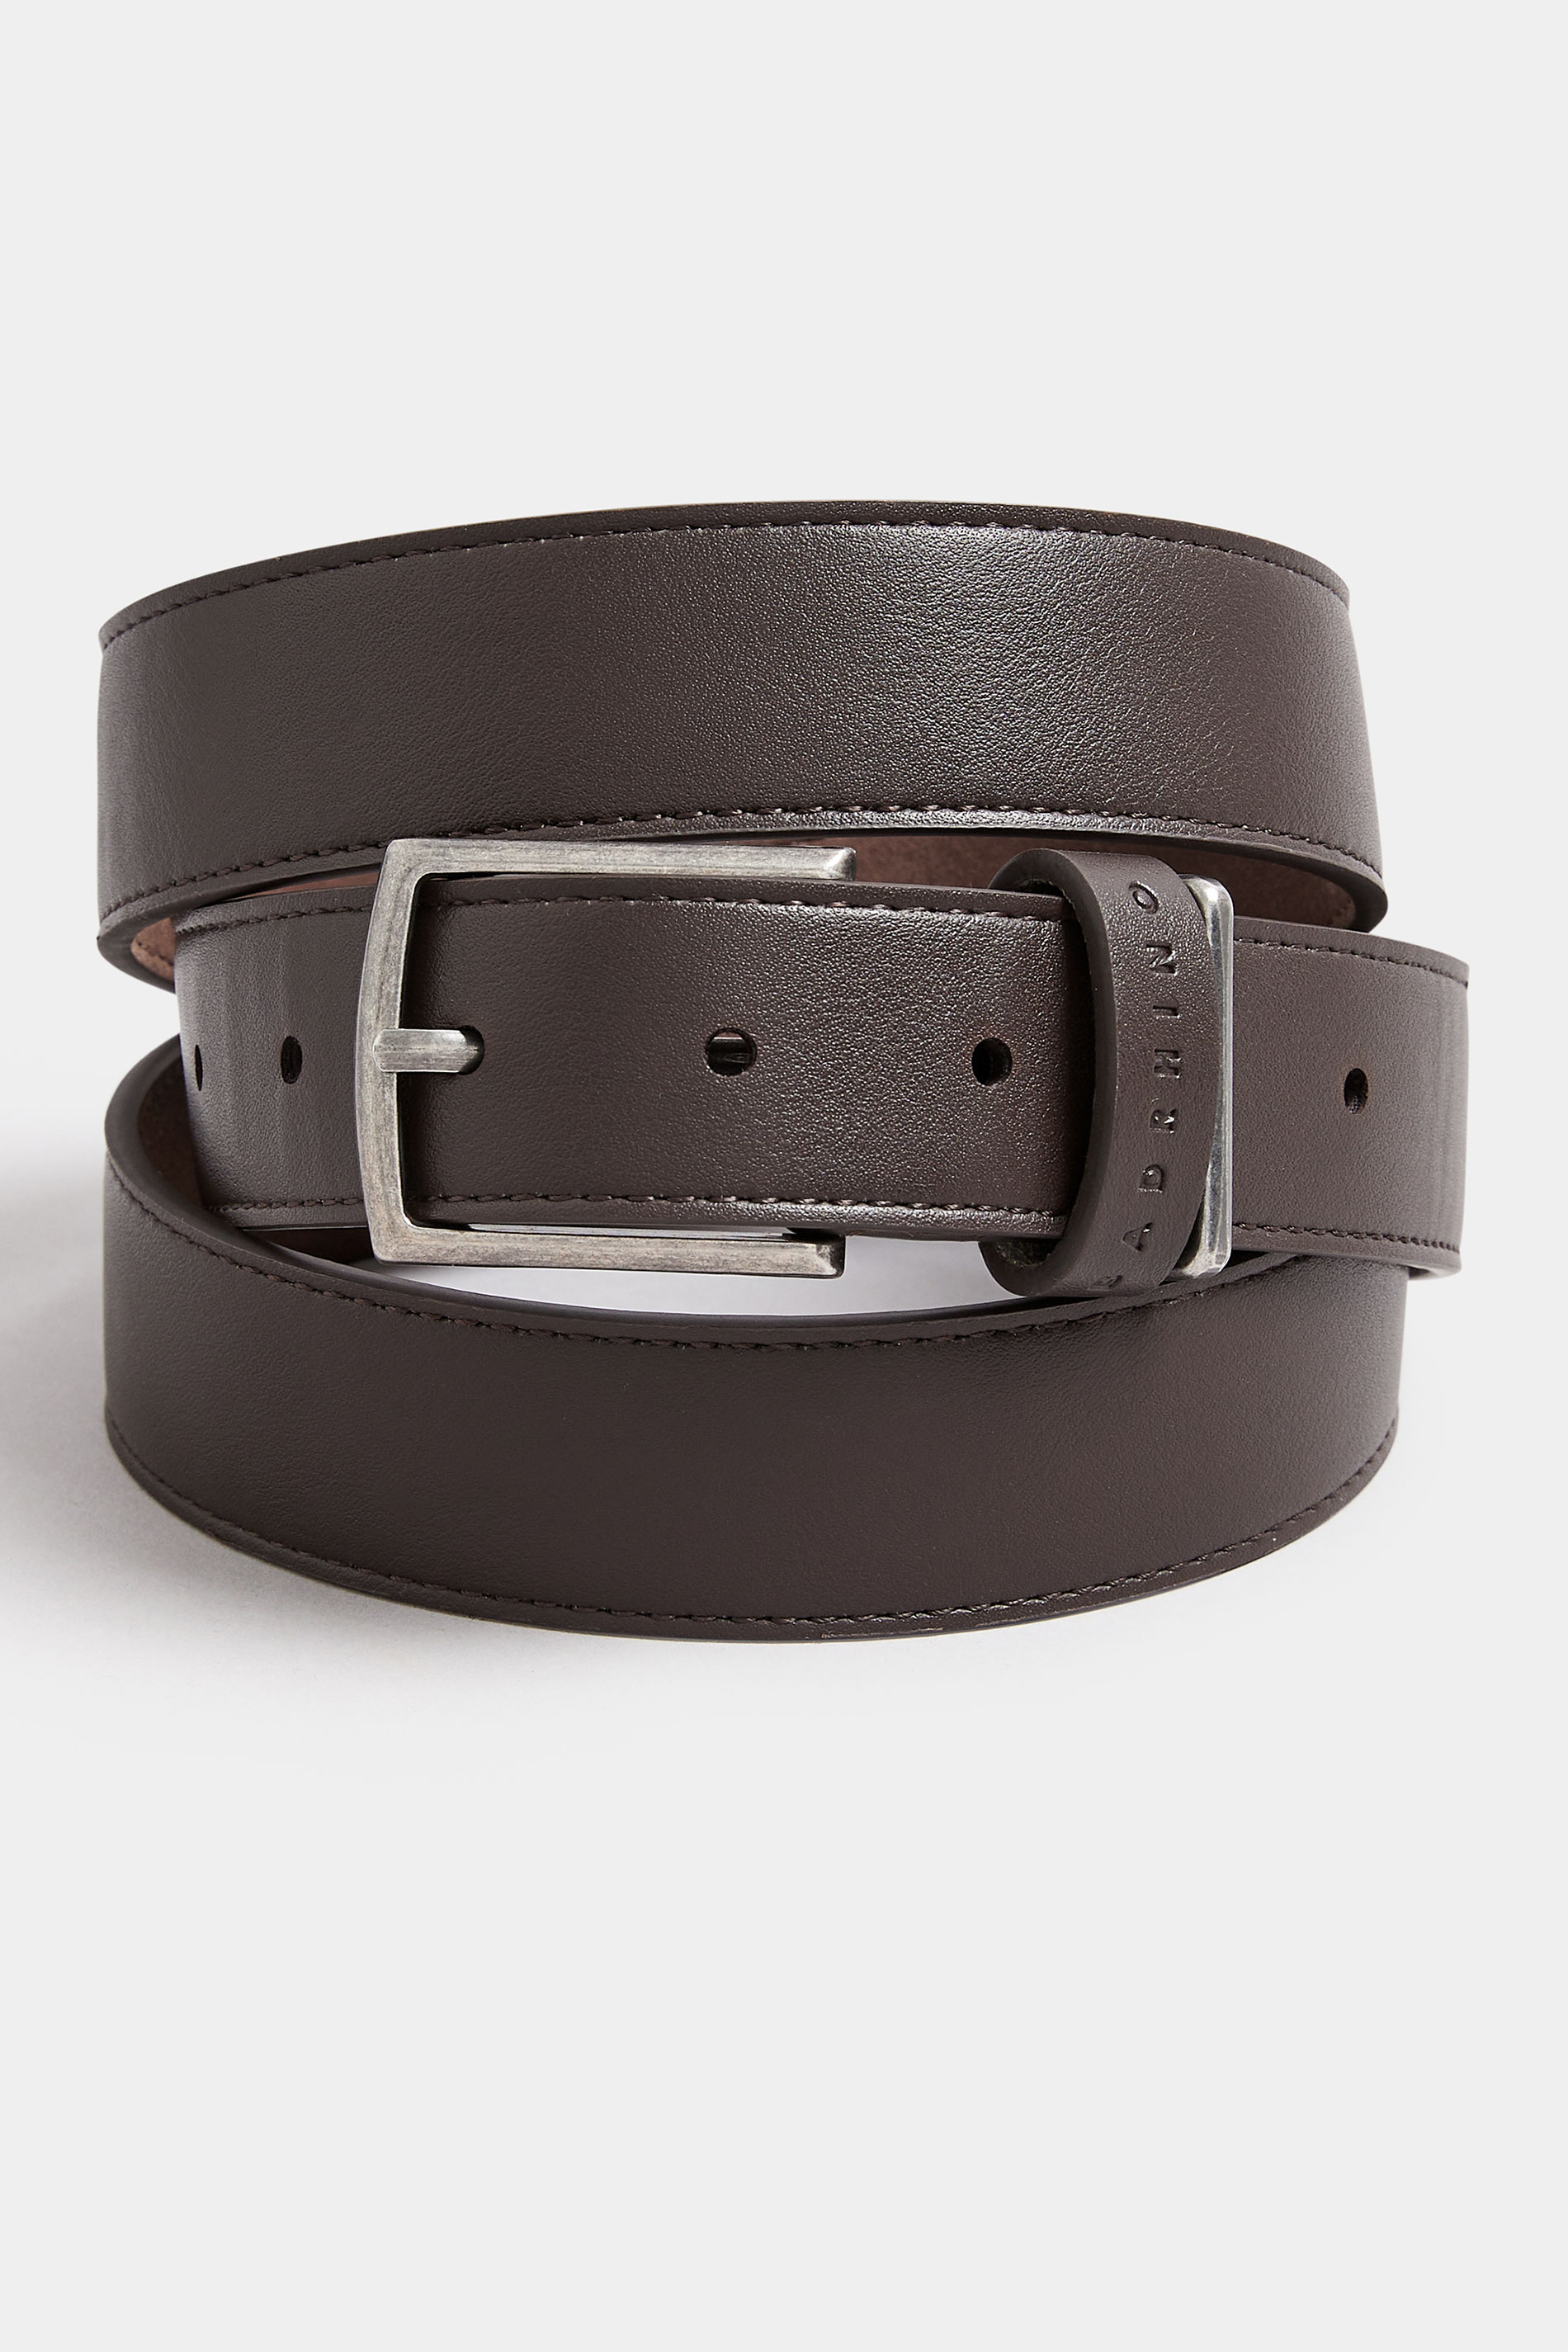 BadRhino Brown Leather PU Bonded Belt | BadRhino 3